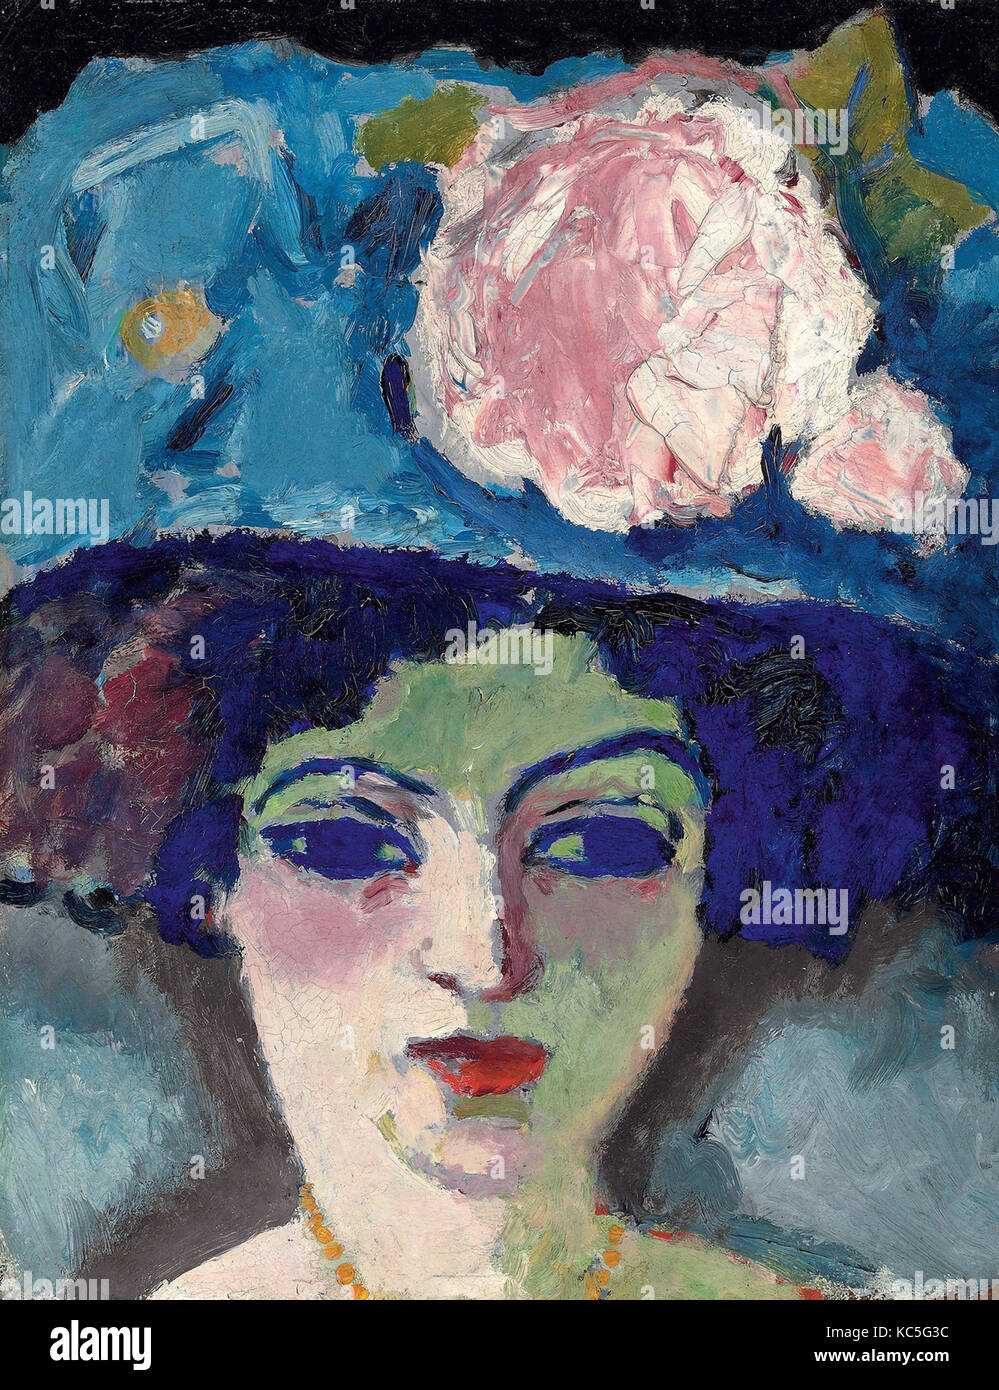 Kees Van Dongen Femme au chapeau fleuri Stock Photo - Alamy